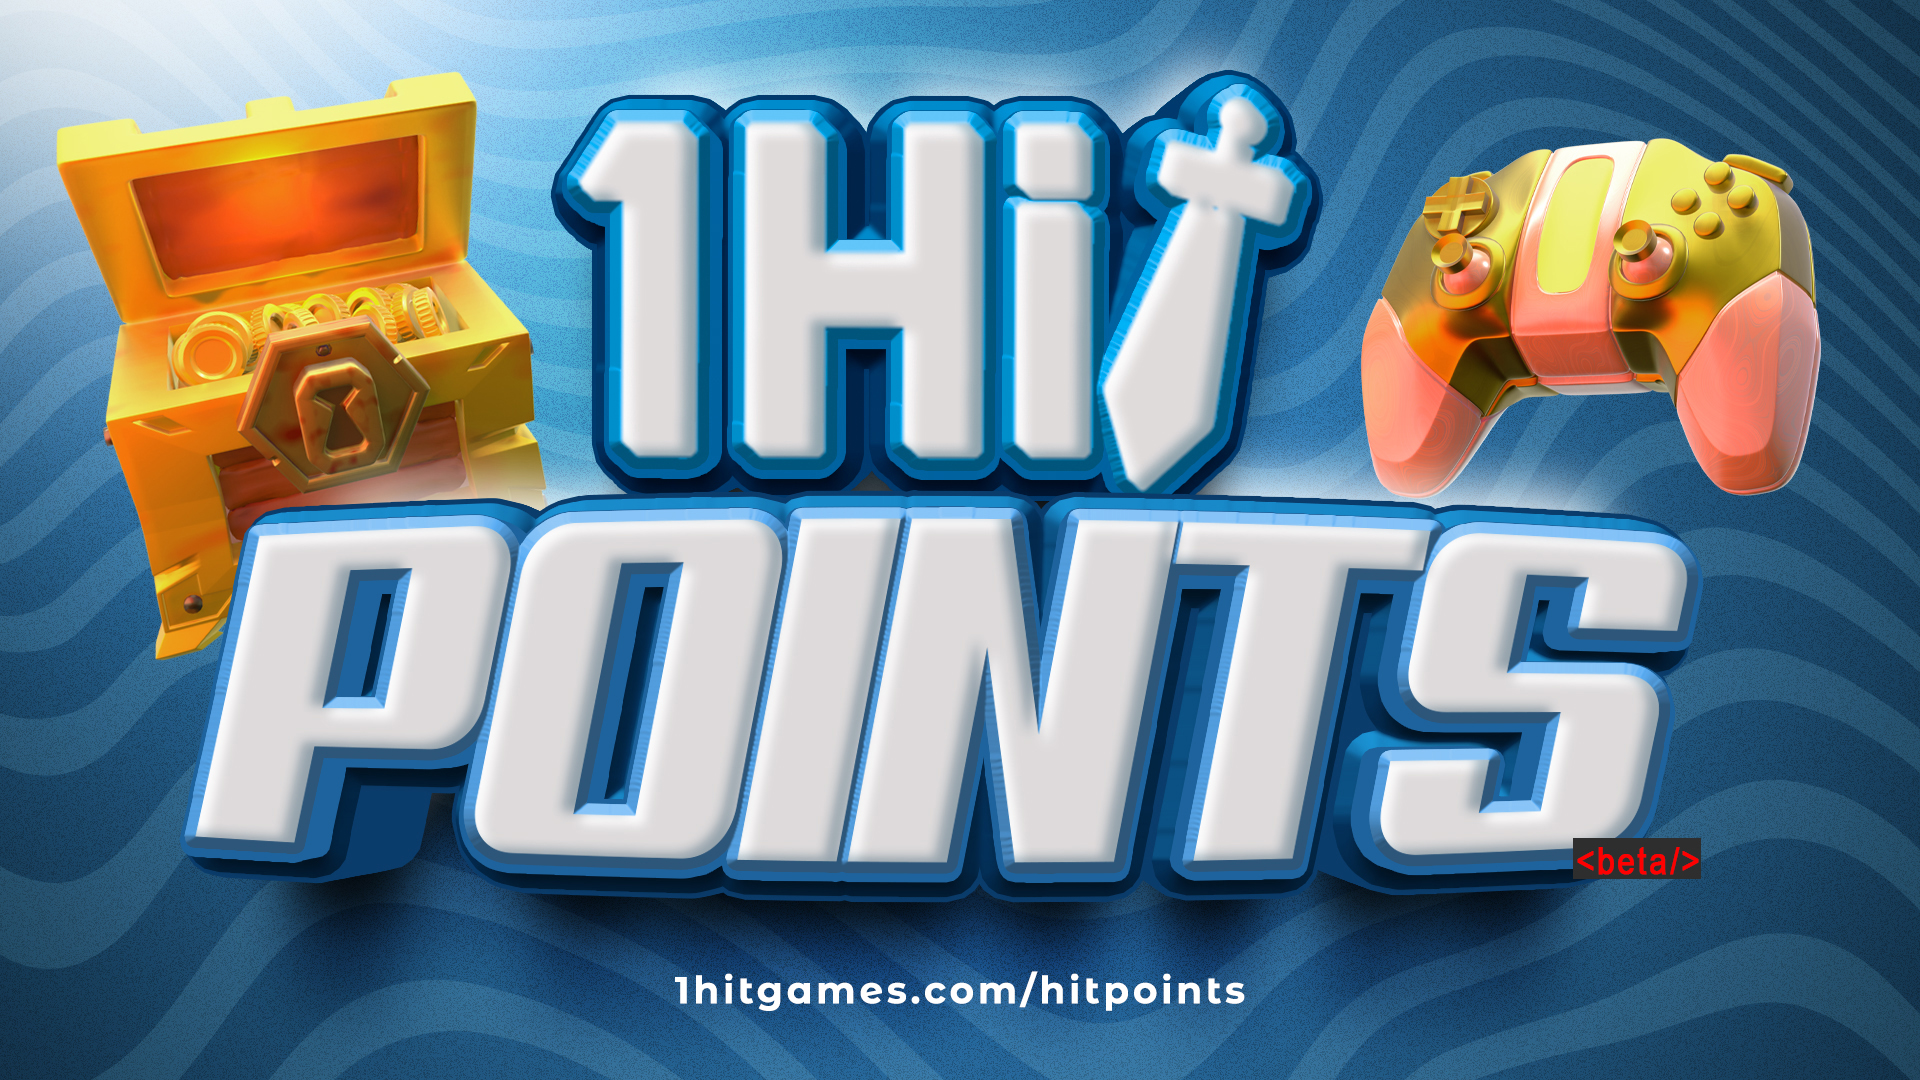 hit points games produtos gamer recompensas gratis